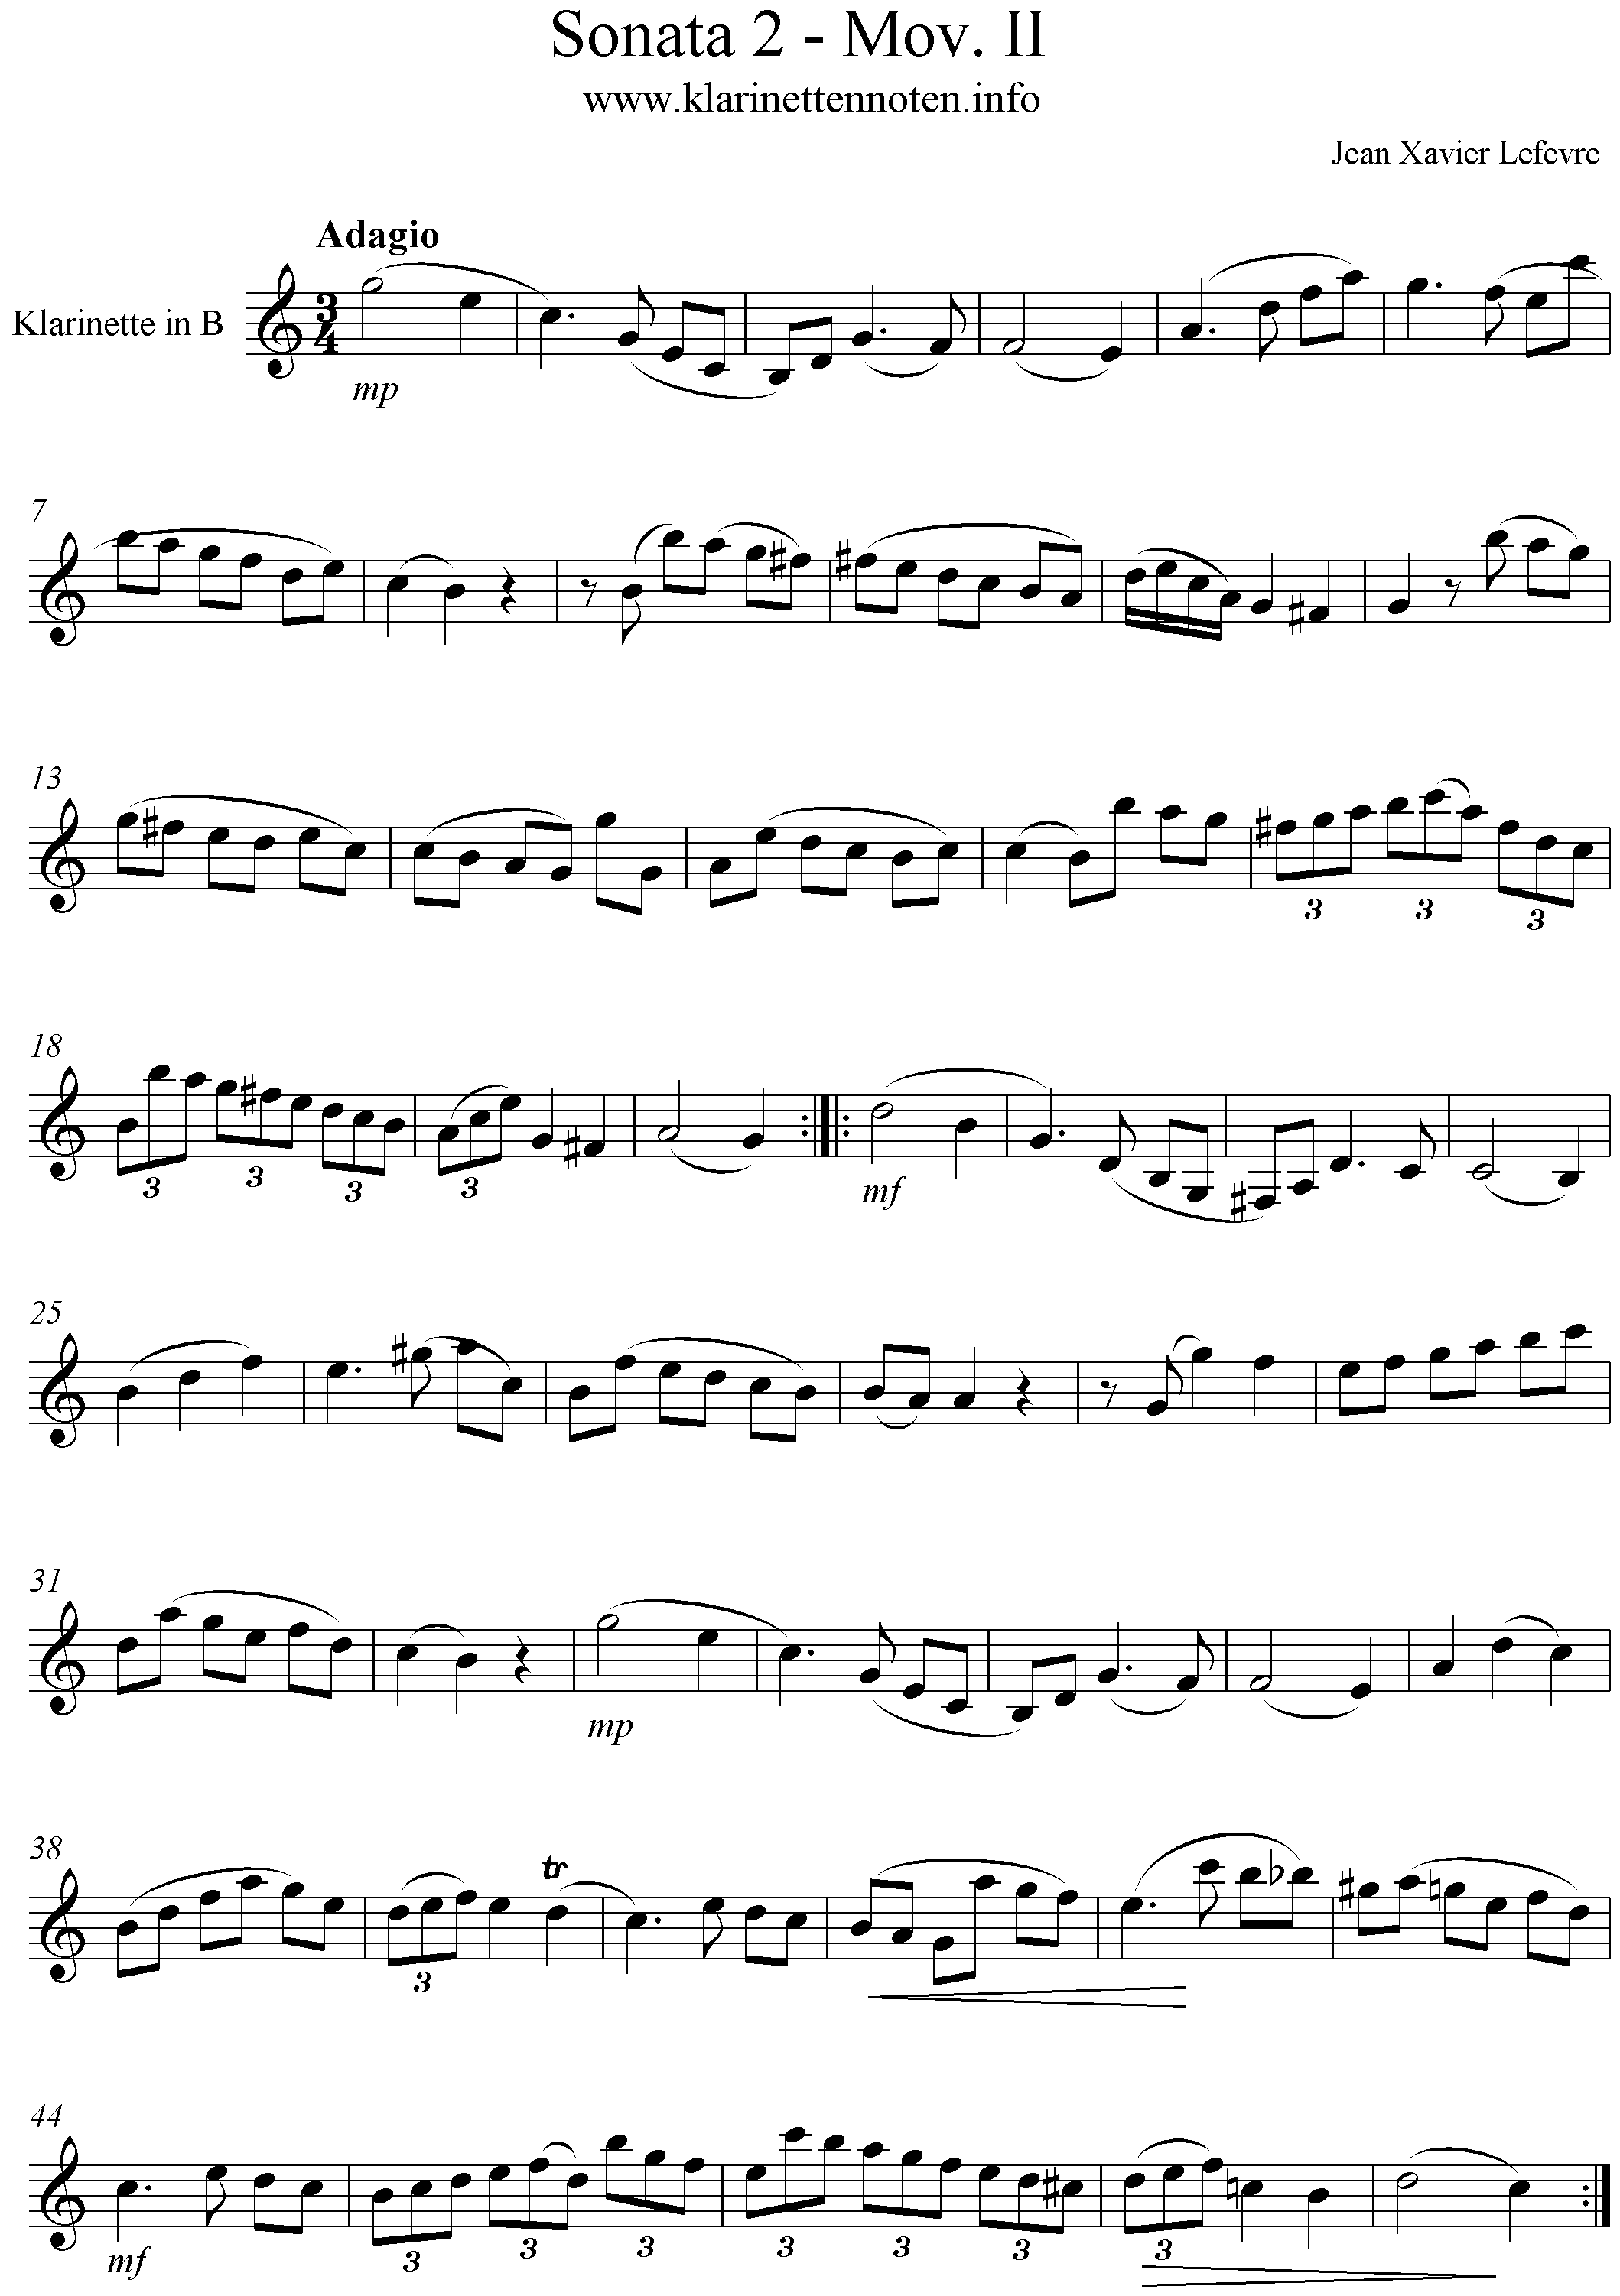 Lefevre Sonata No. 2 Mov. II Adagio